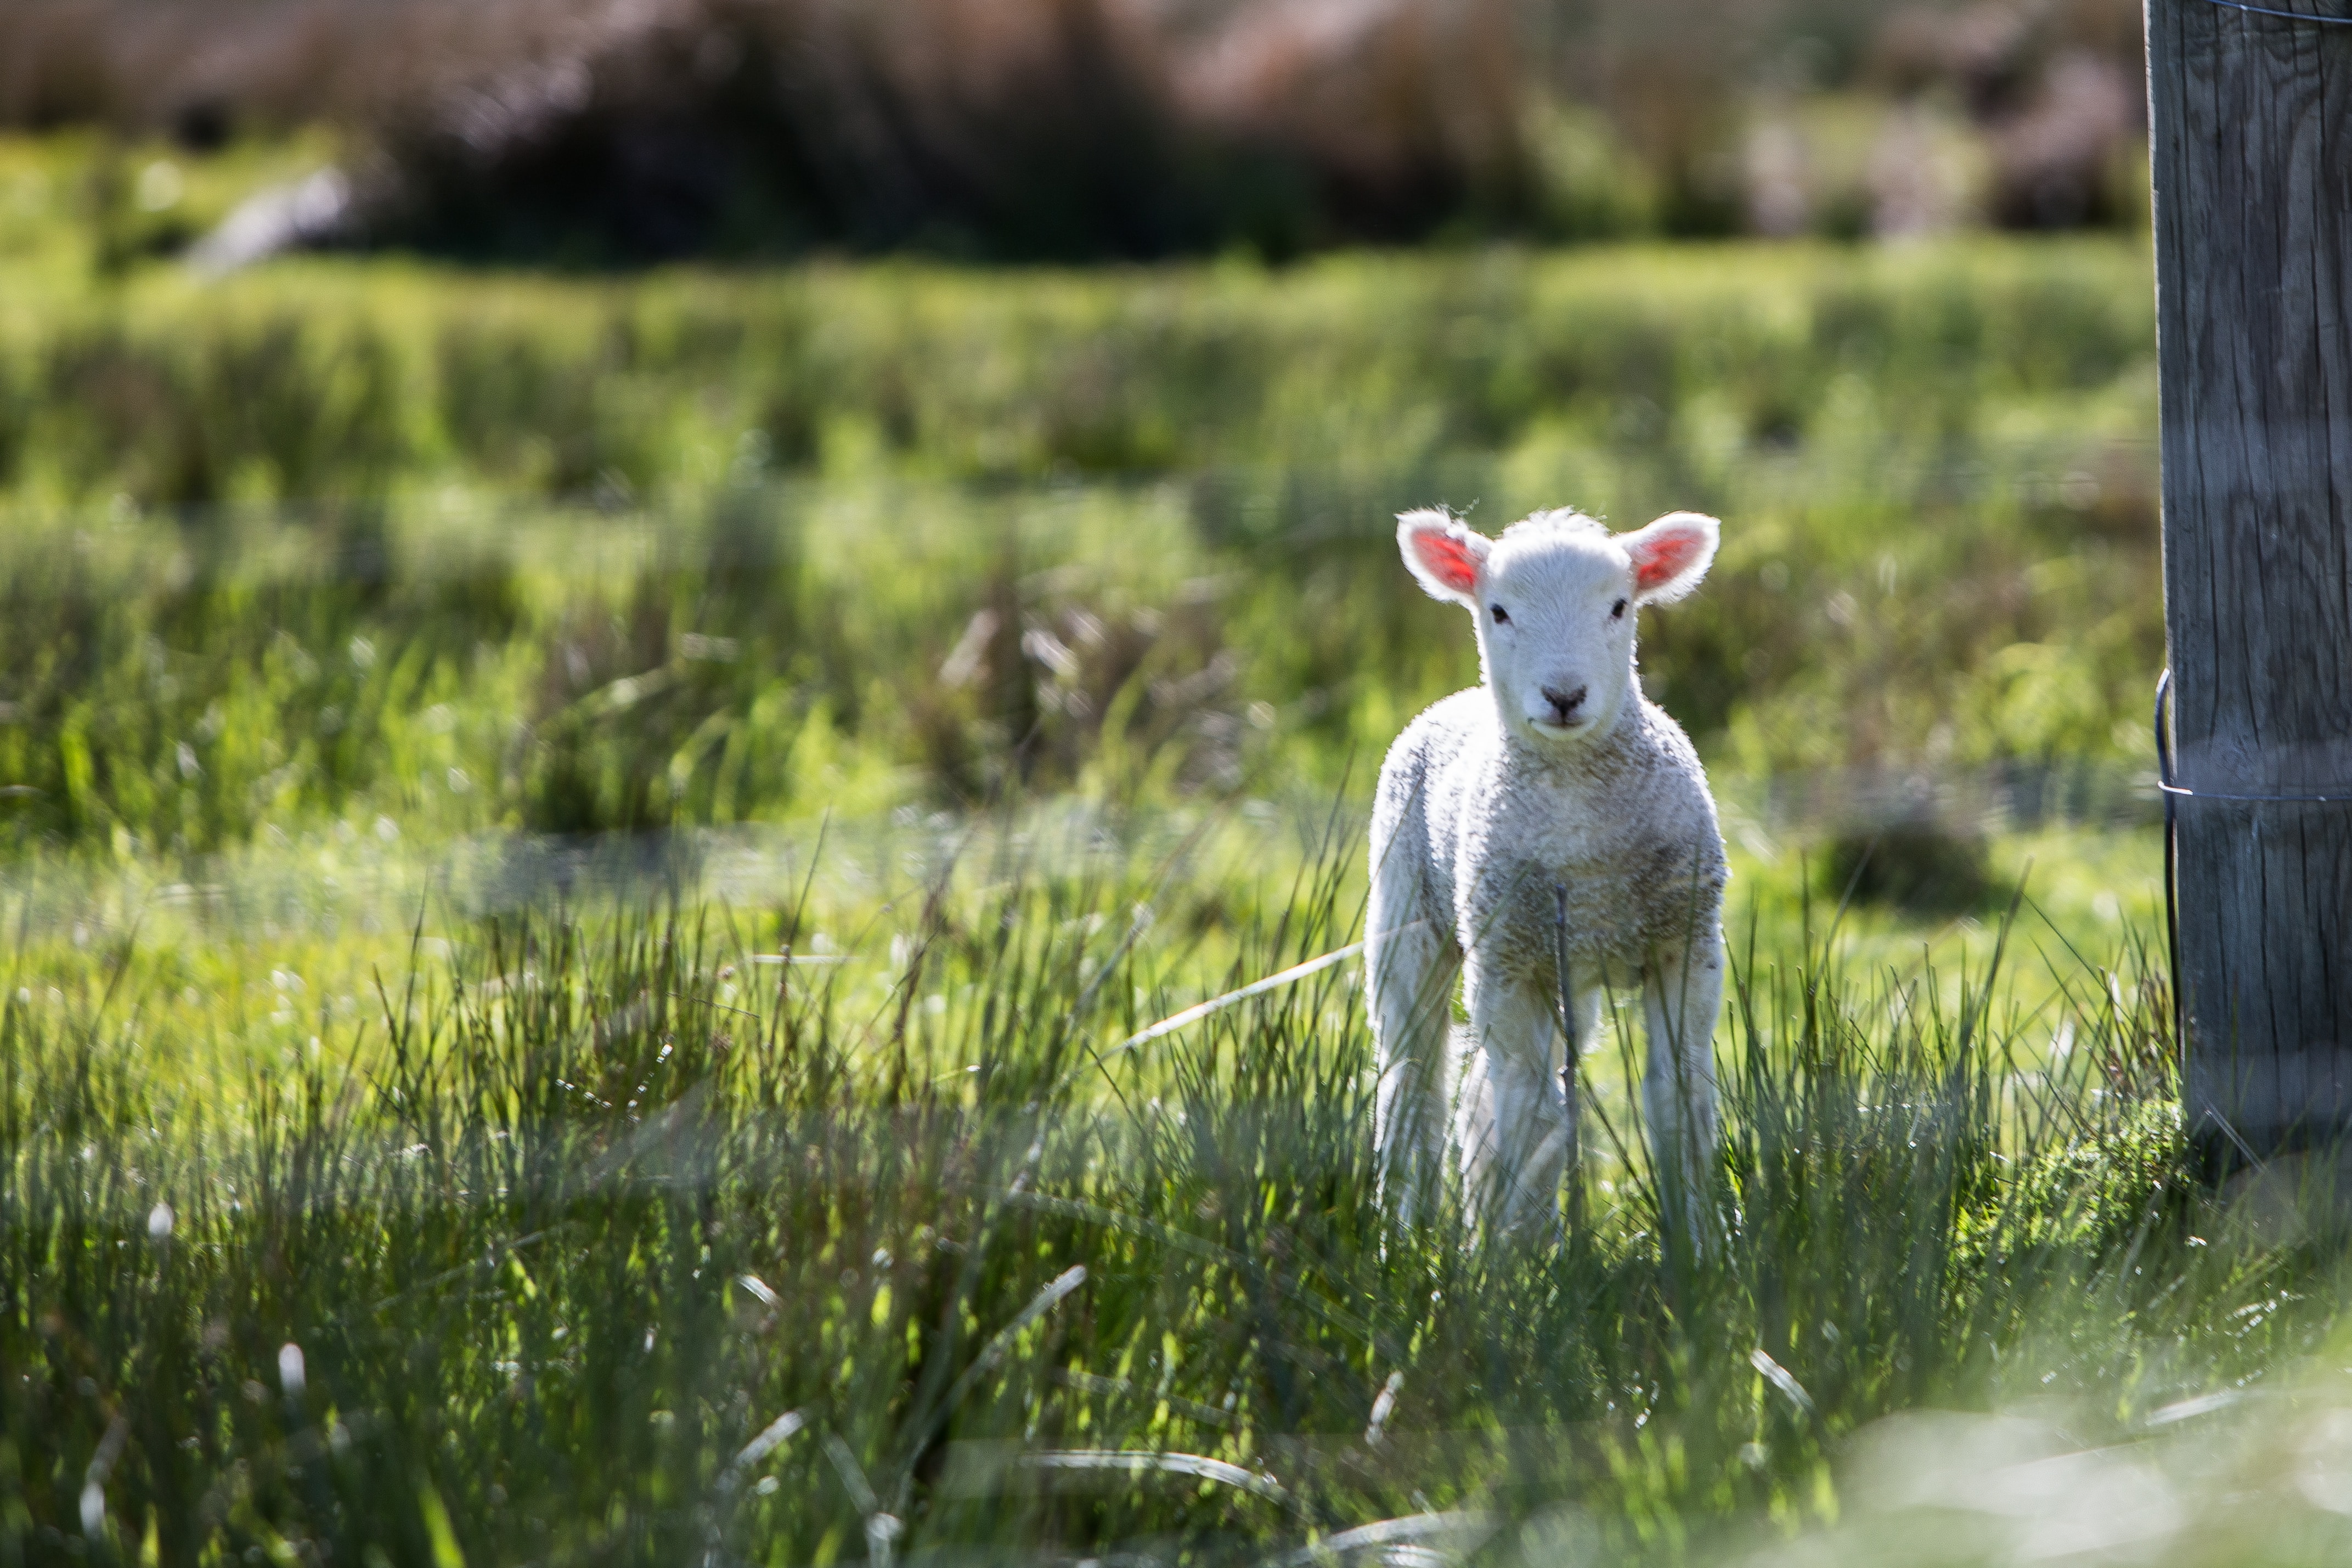 A young lamb looks at the camera